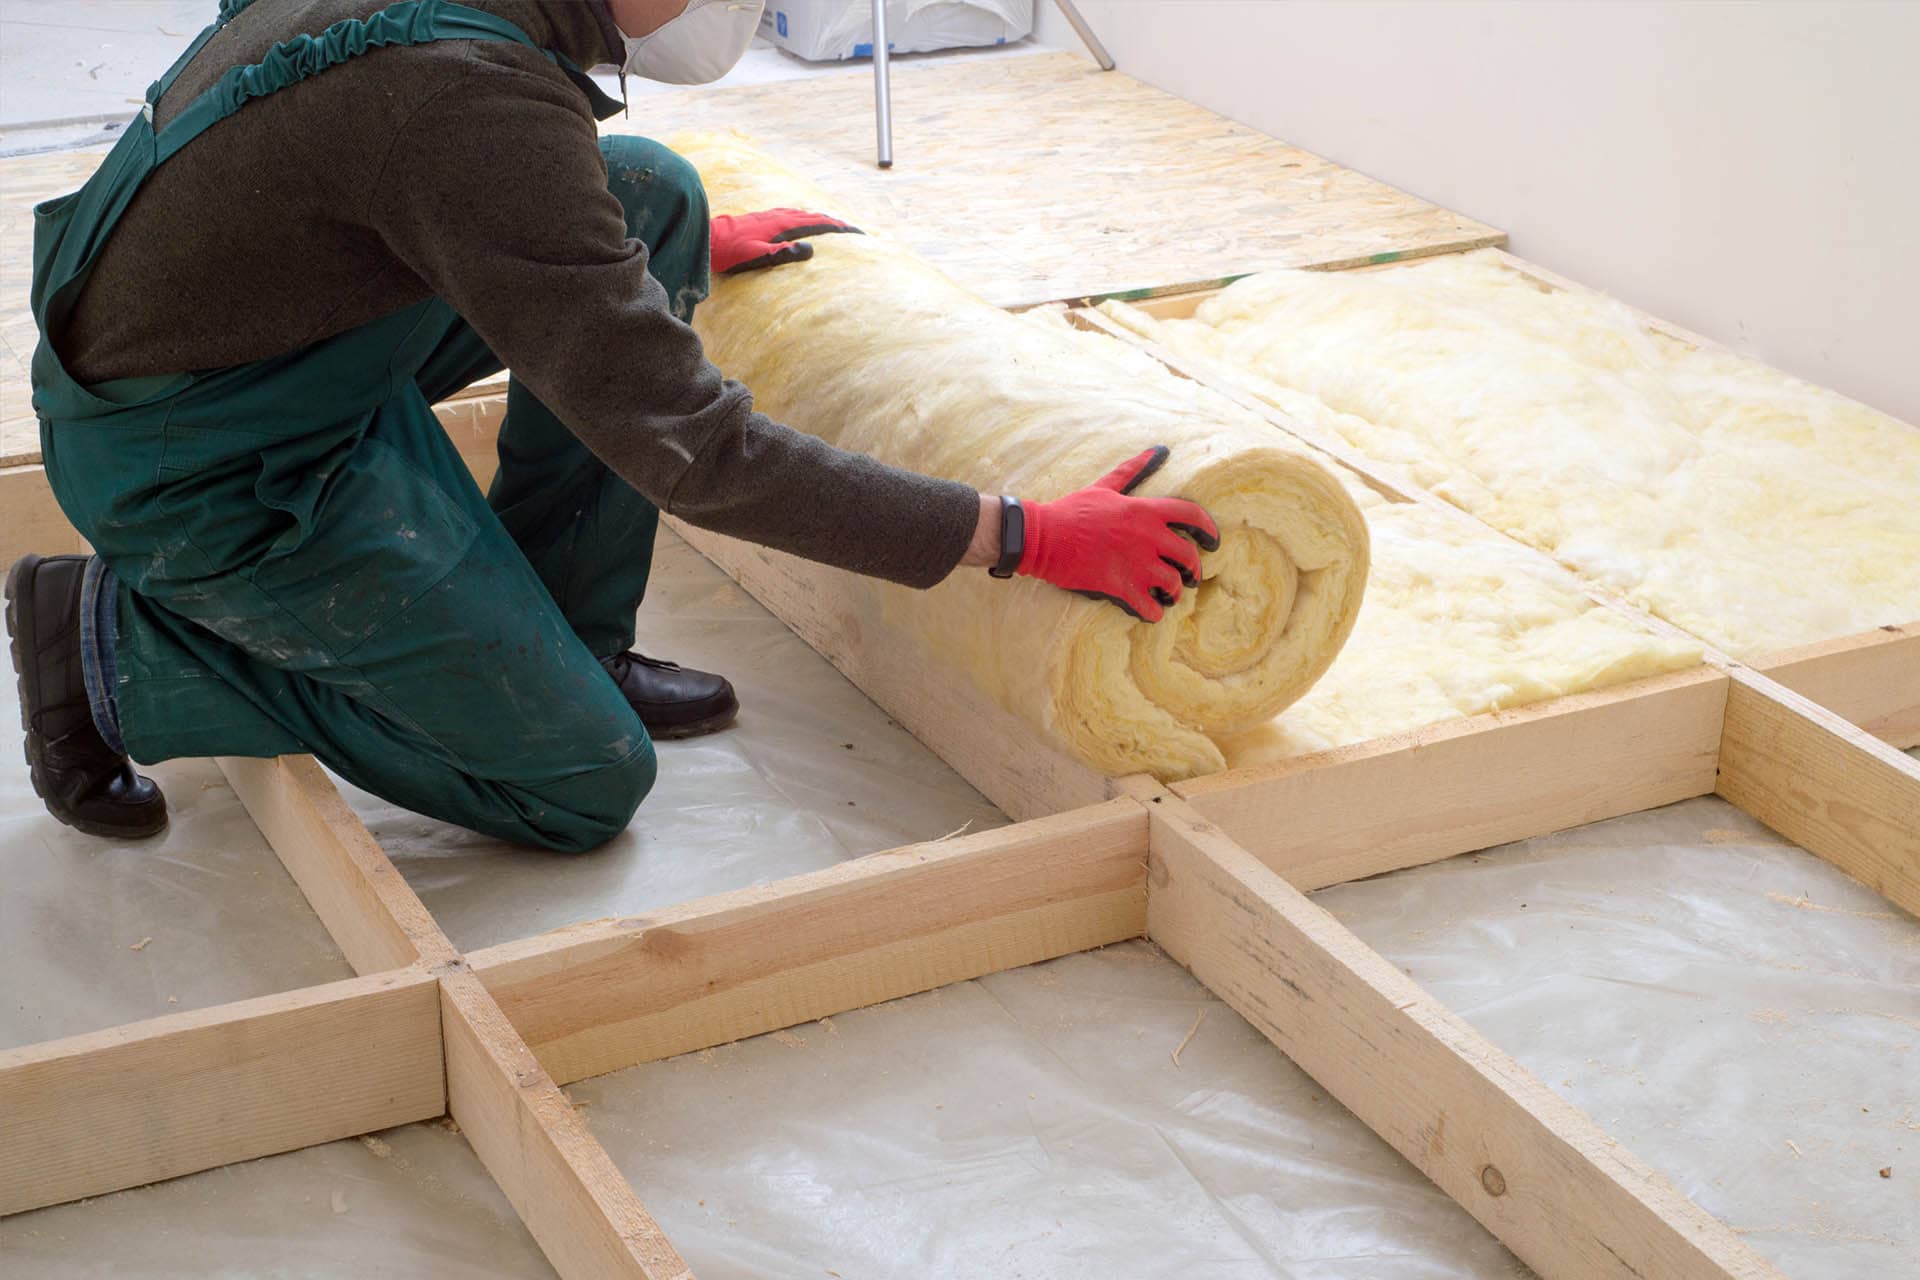 thermal-insulation-wool-rolls-on-floor-installation-building-materials